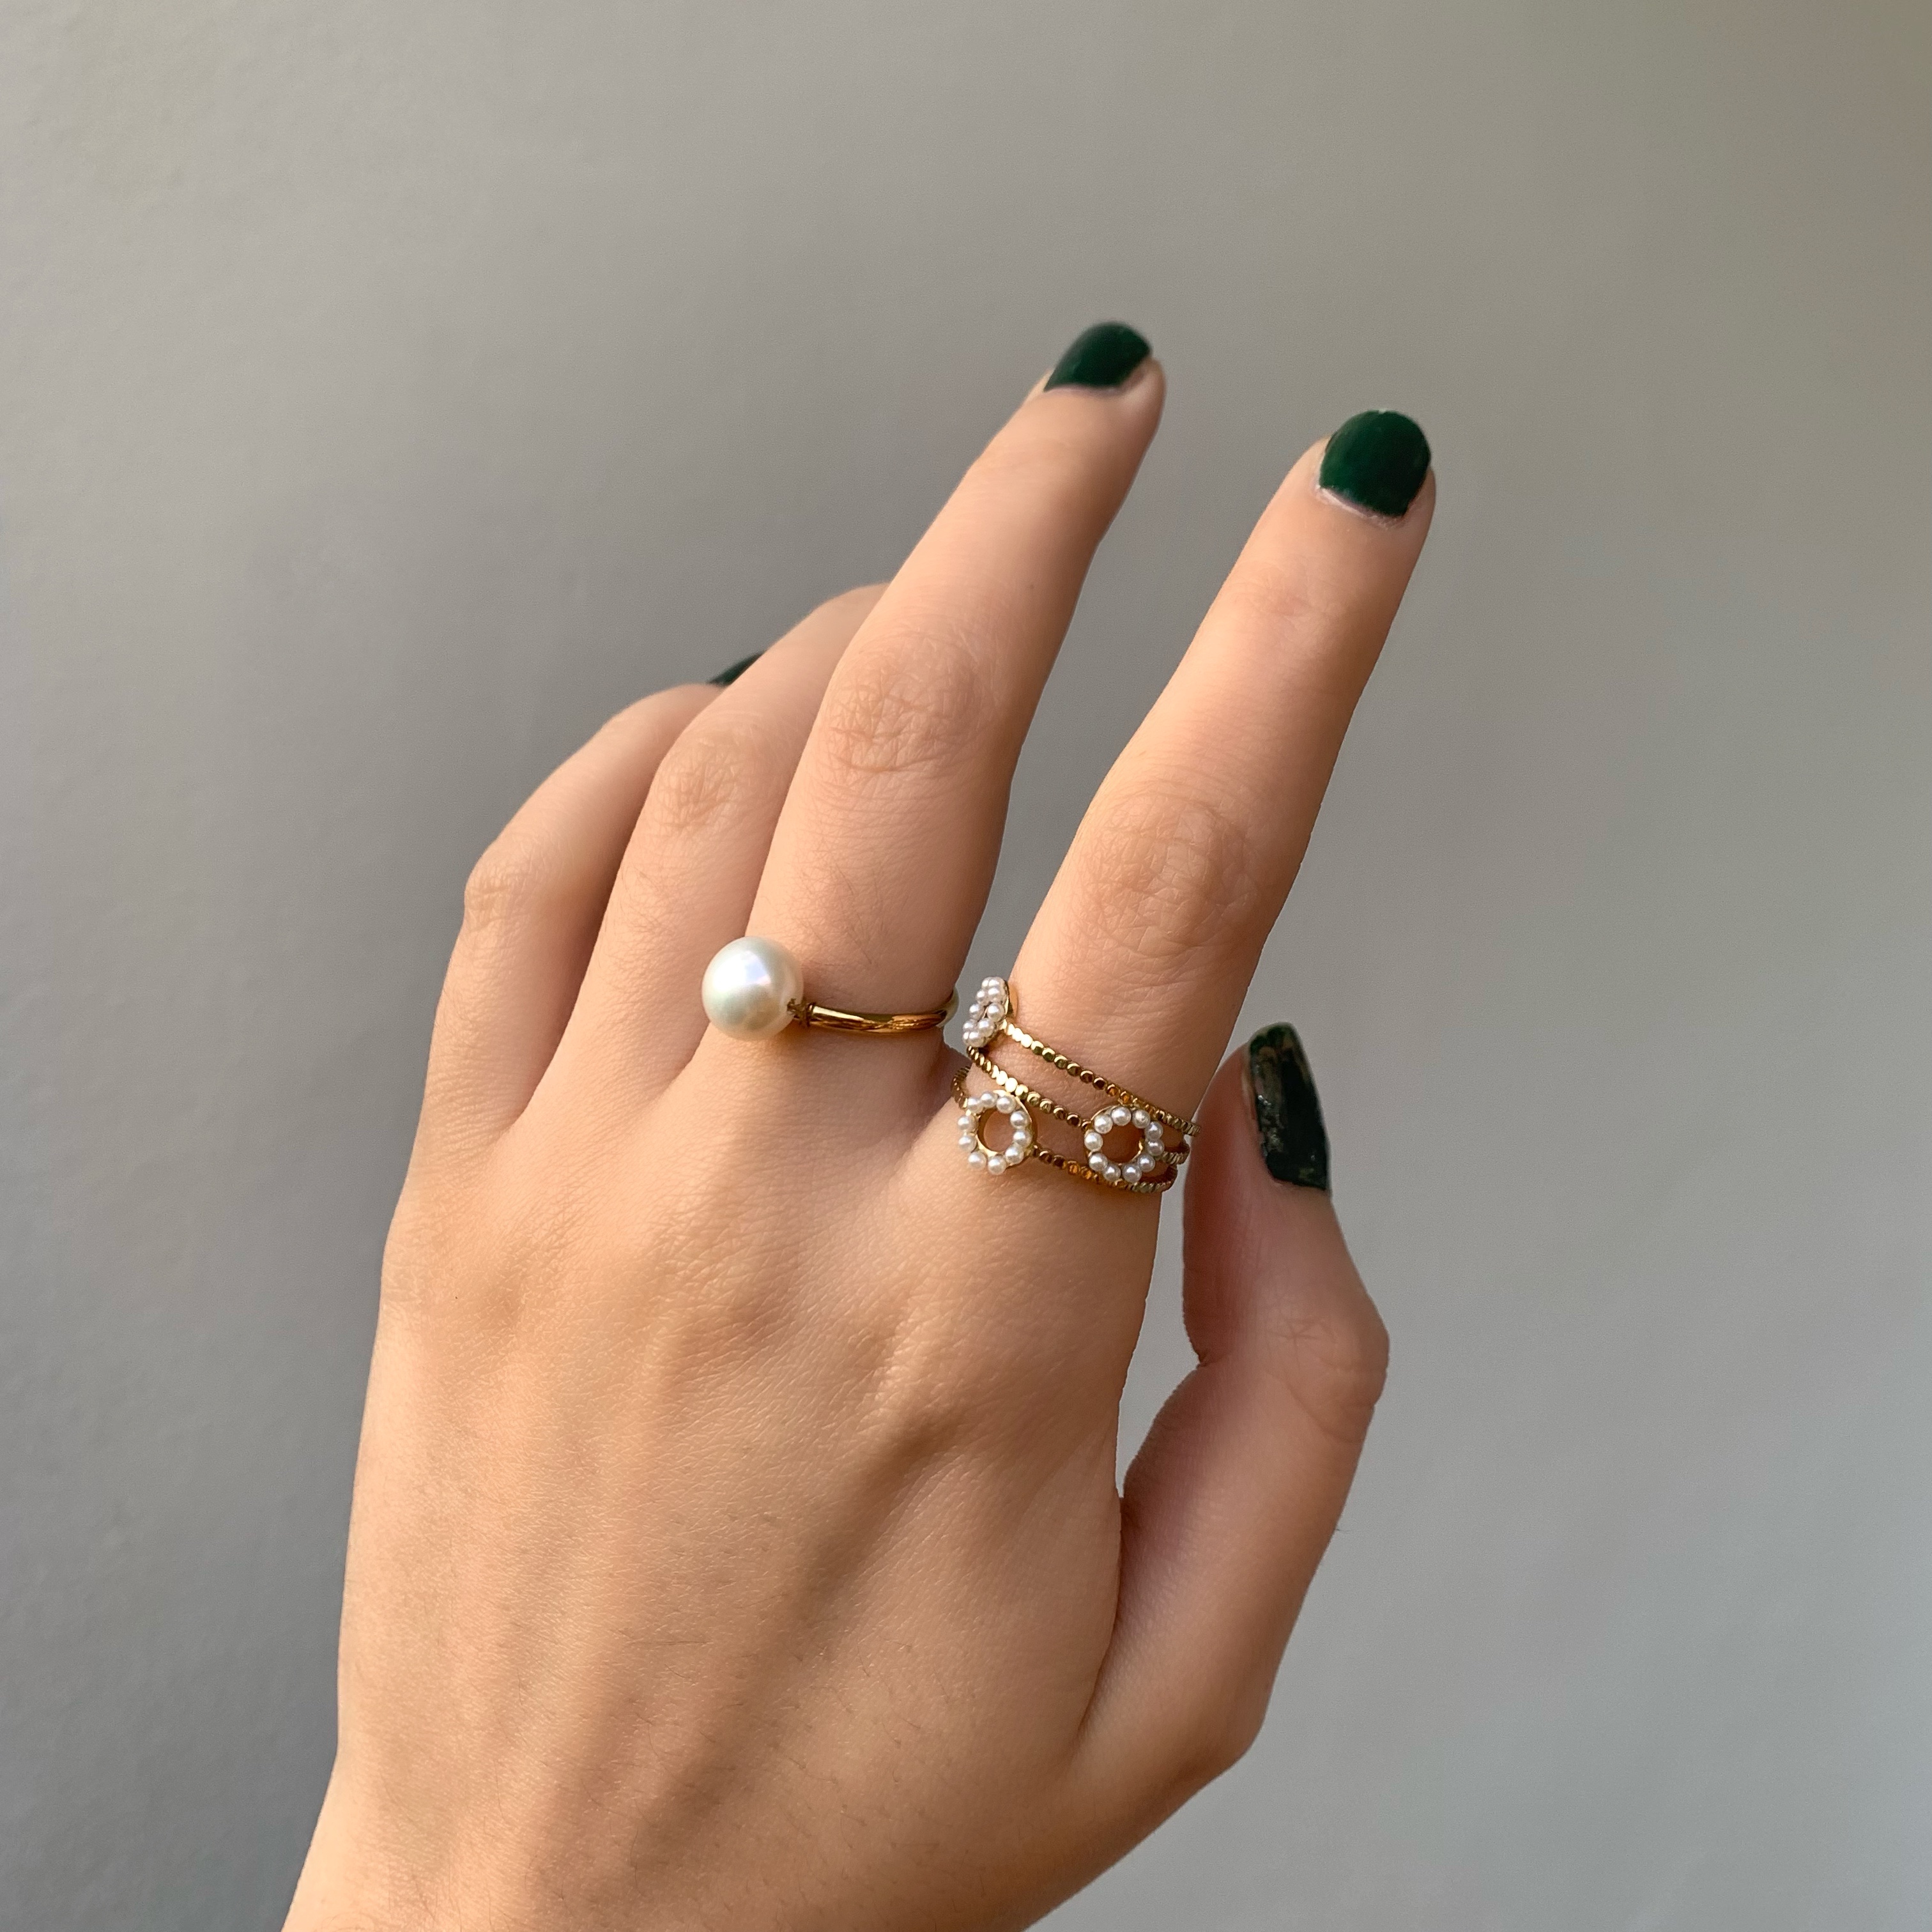 Romance Pearl Handmade Stainless Steel Ring